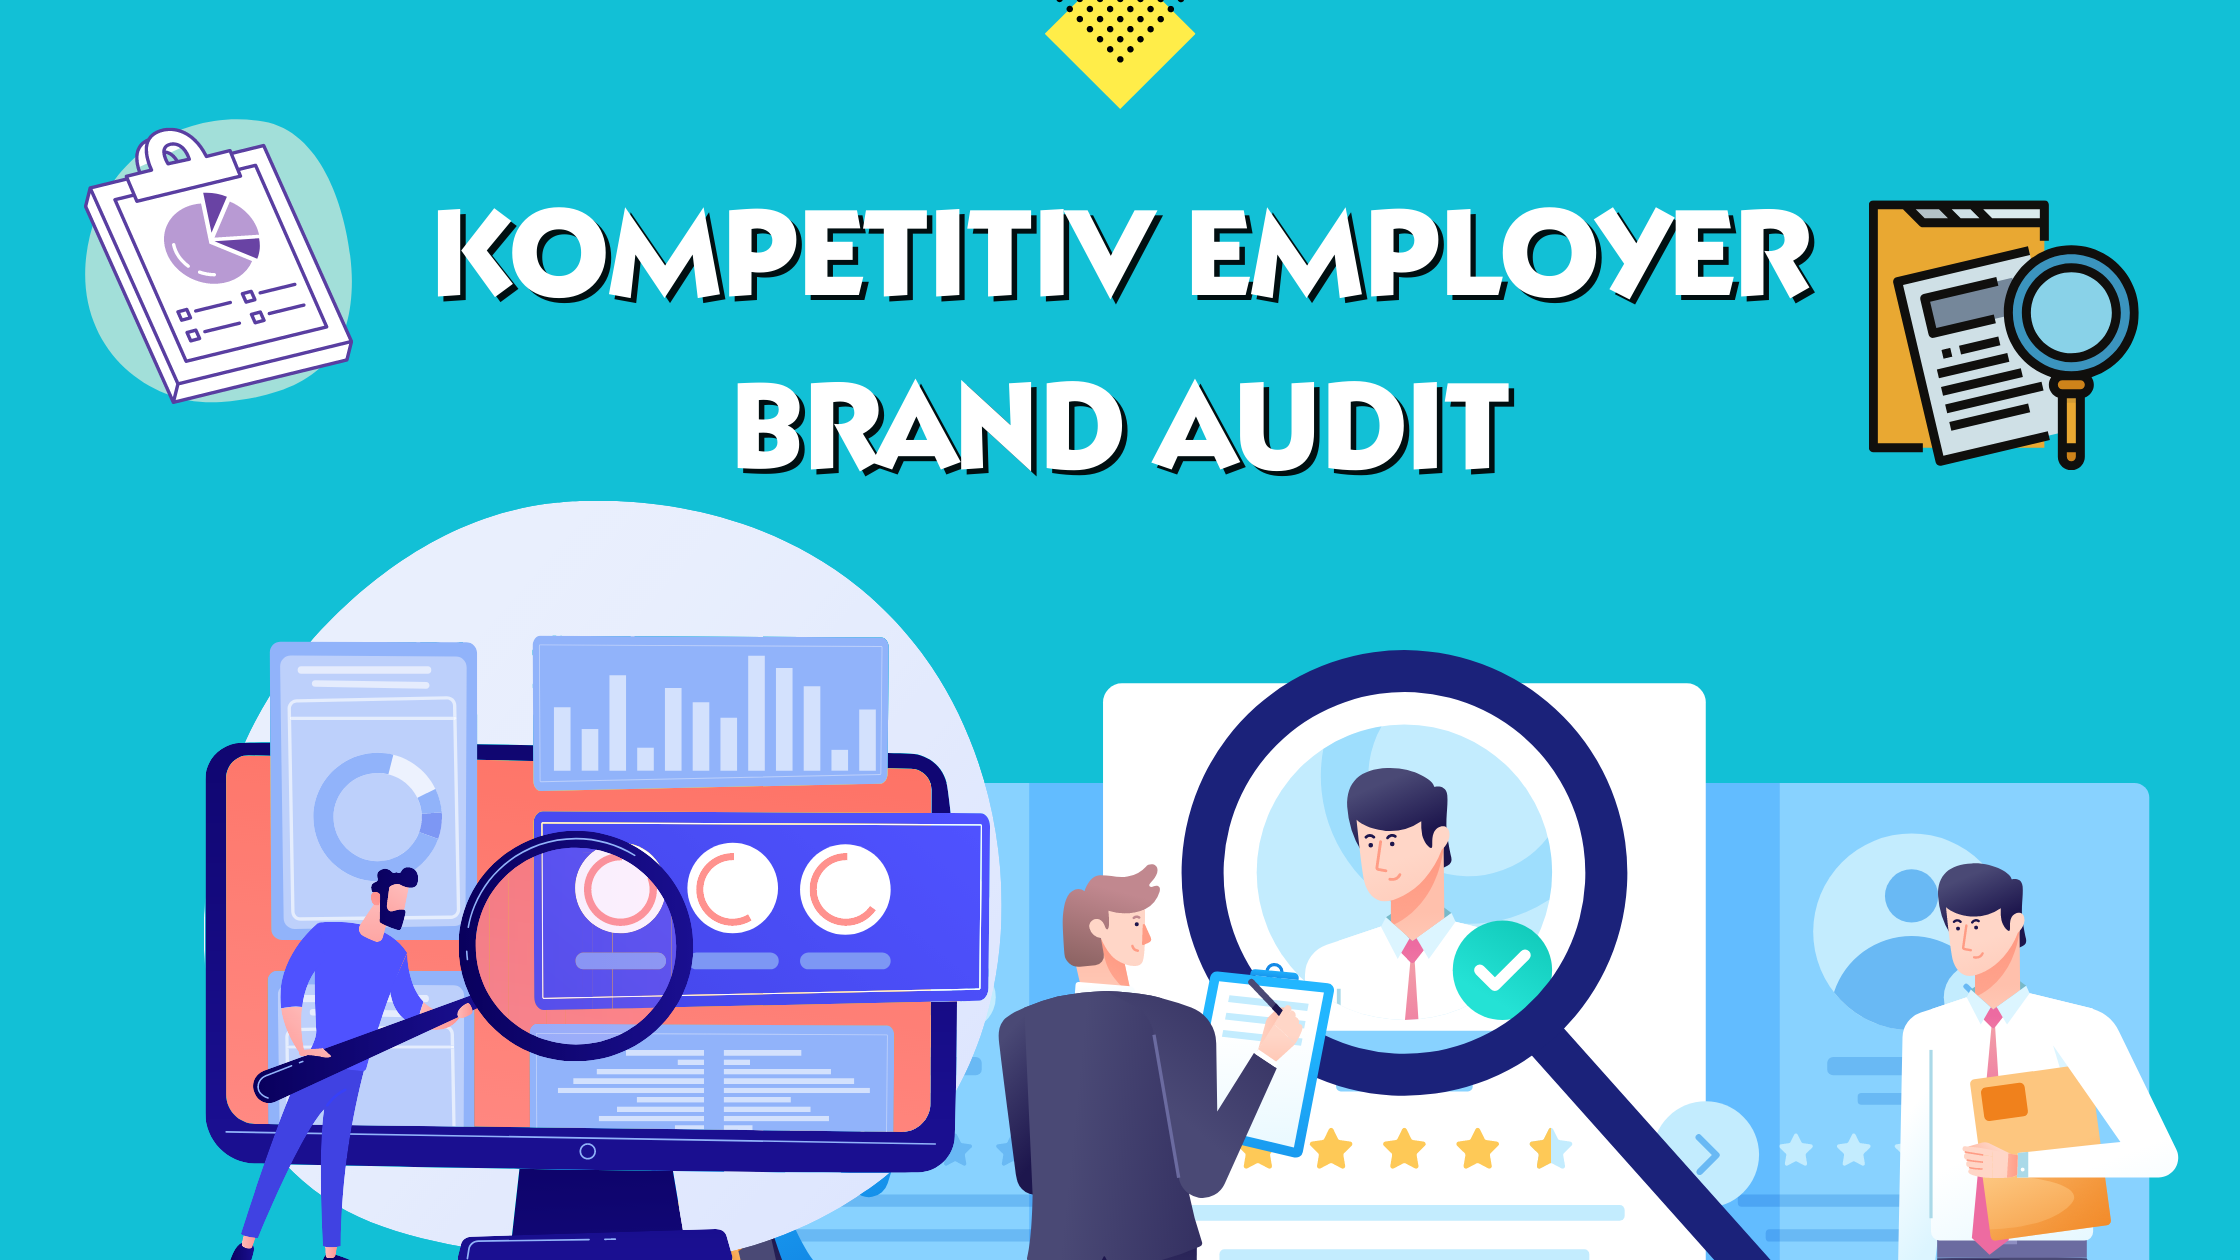 Kompetitiv employer branding audit